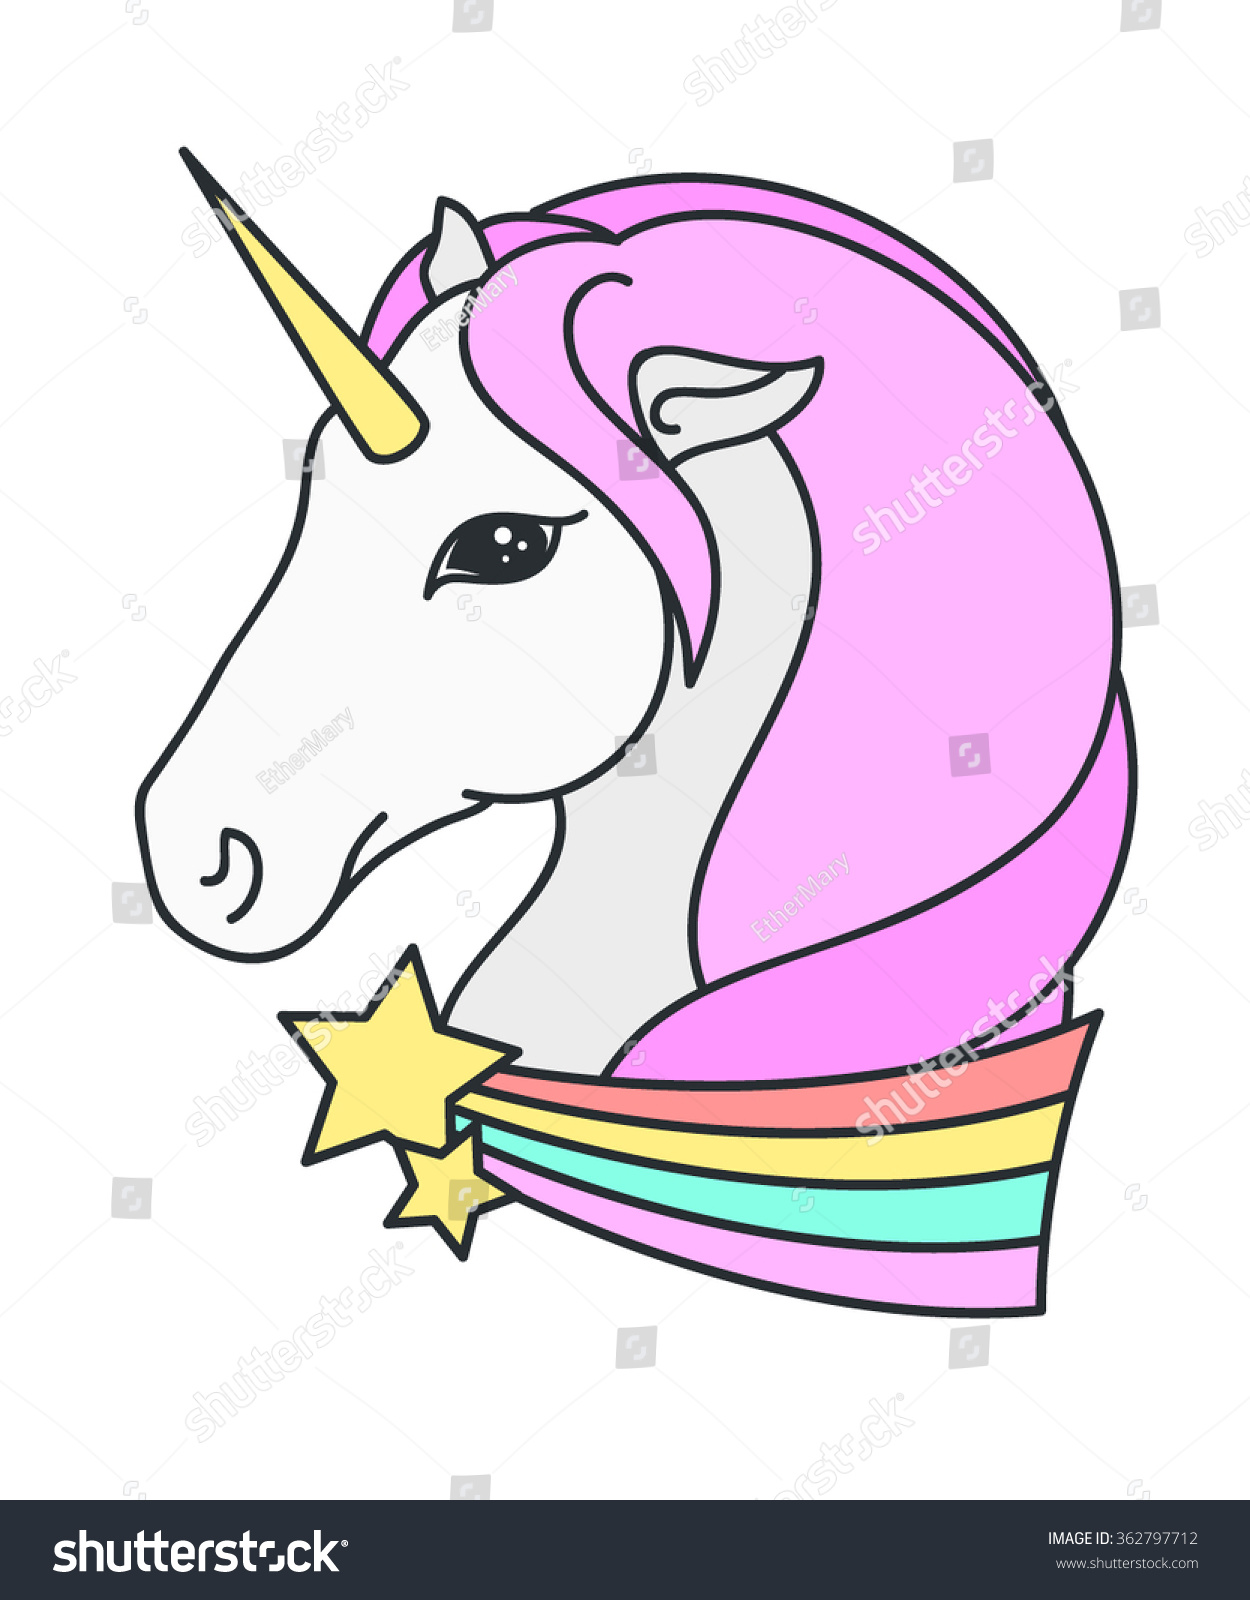 Unicorn. Vector Illustration - 362797712 : Shutterstock